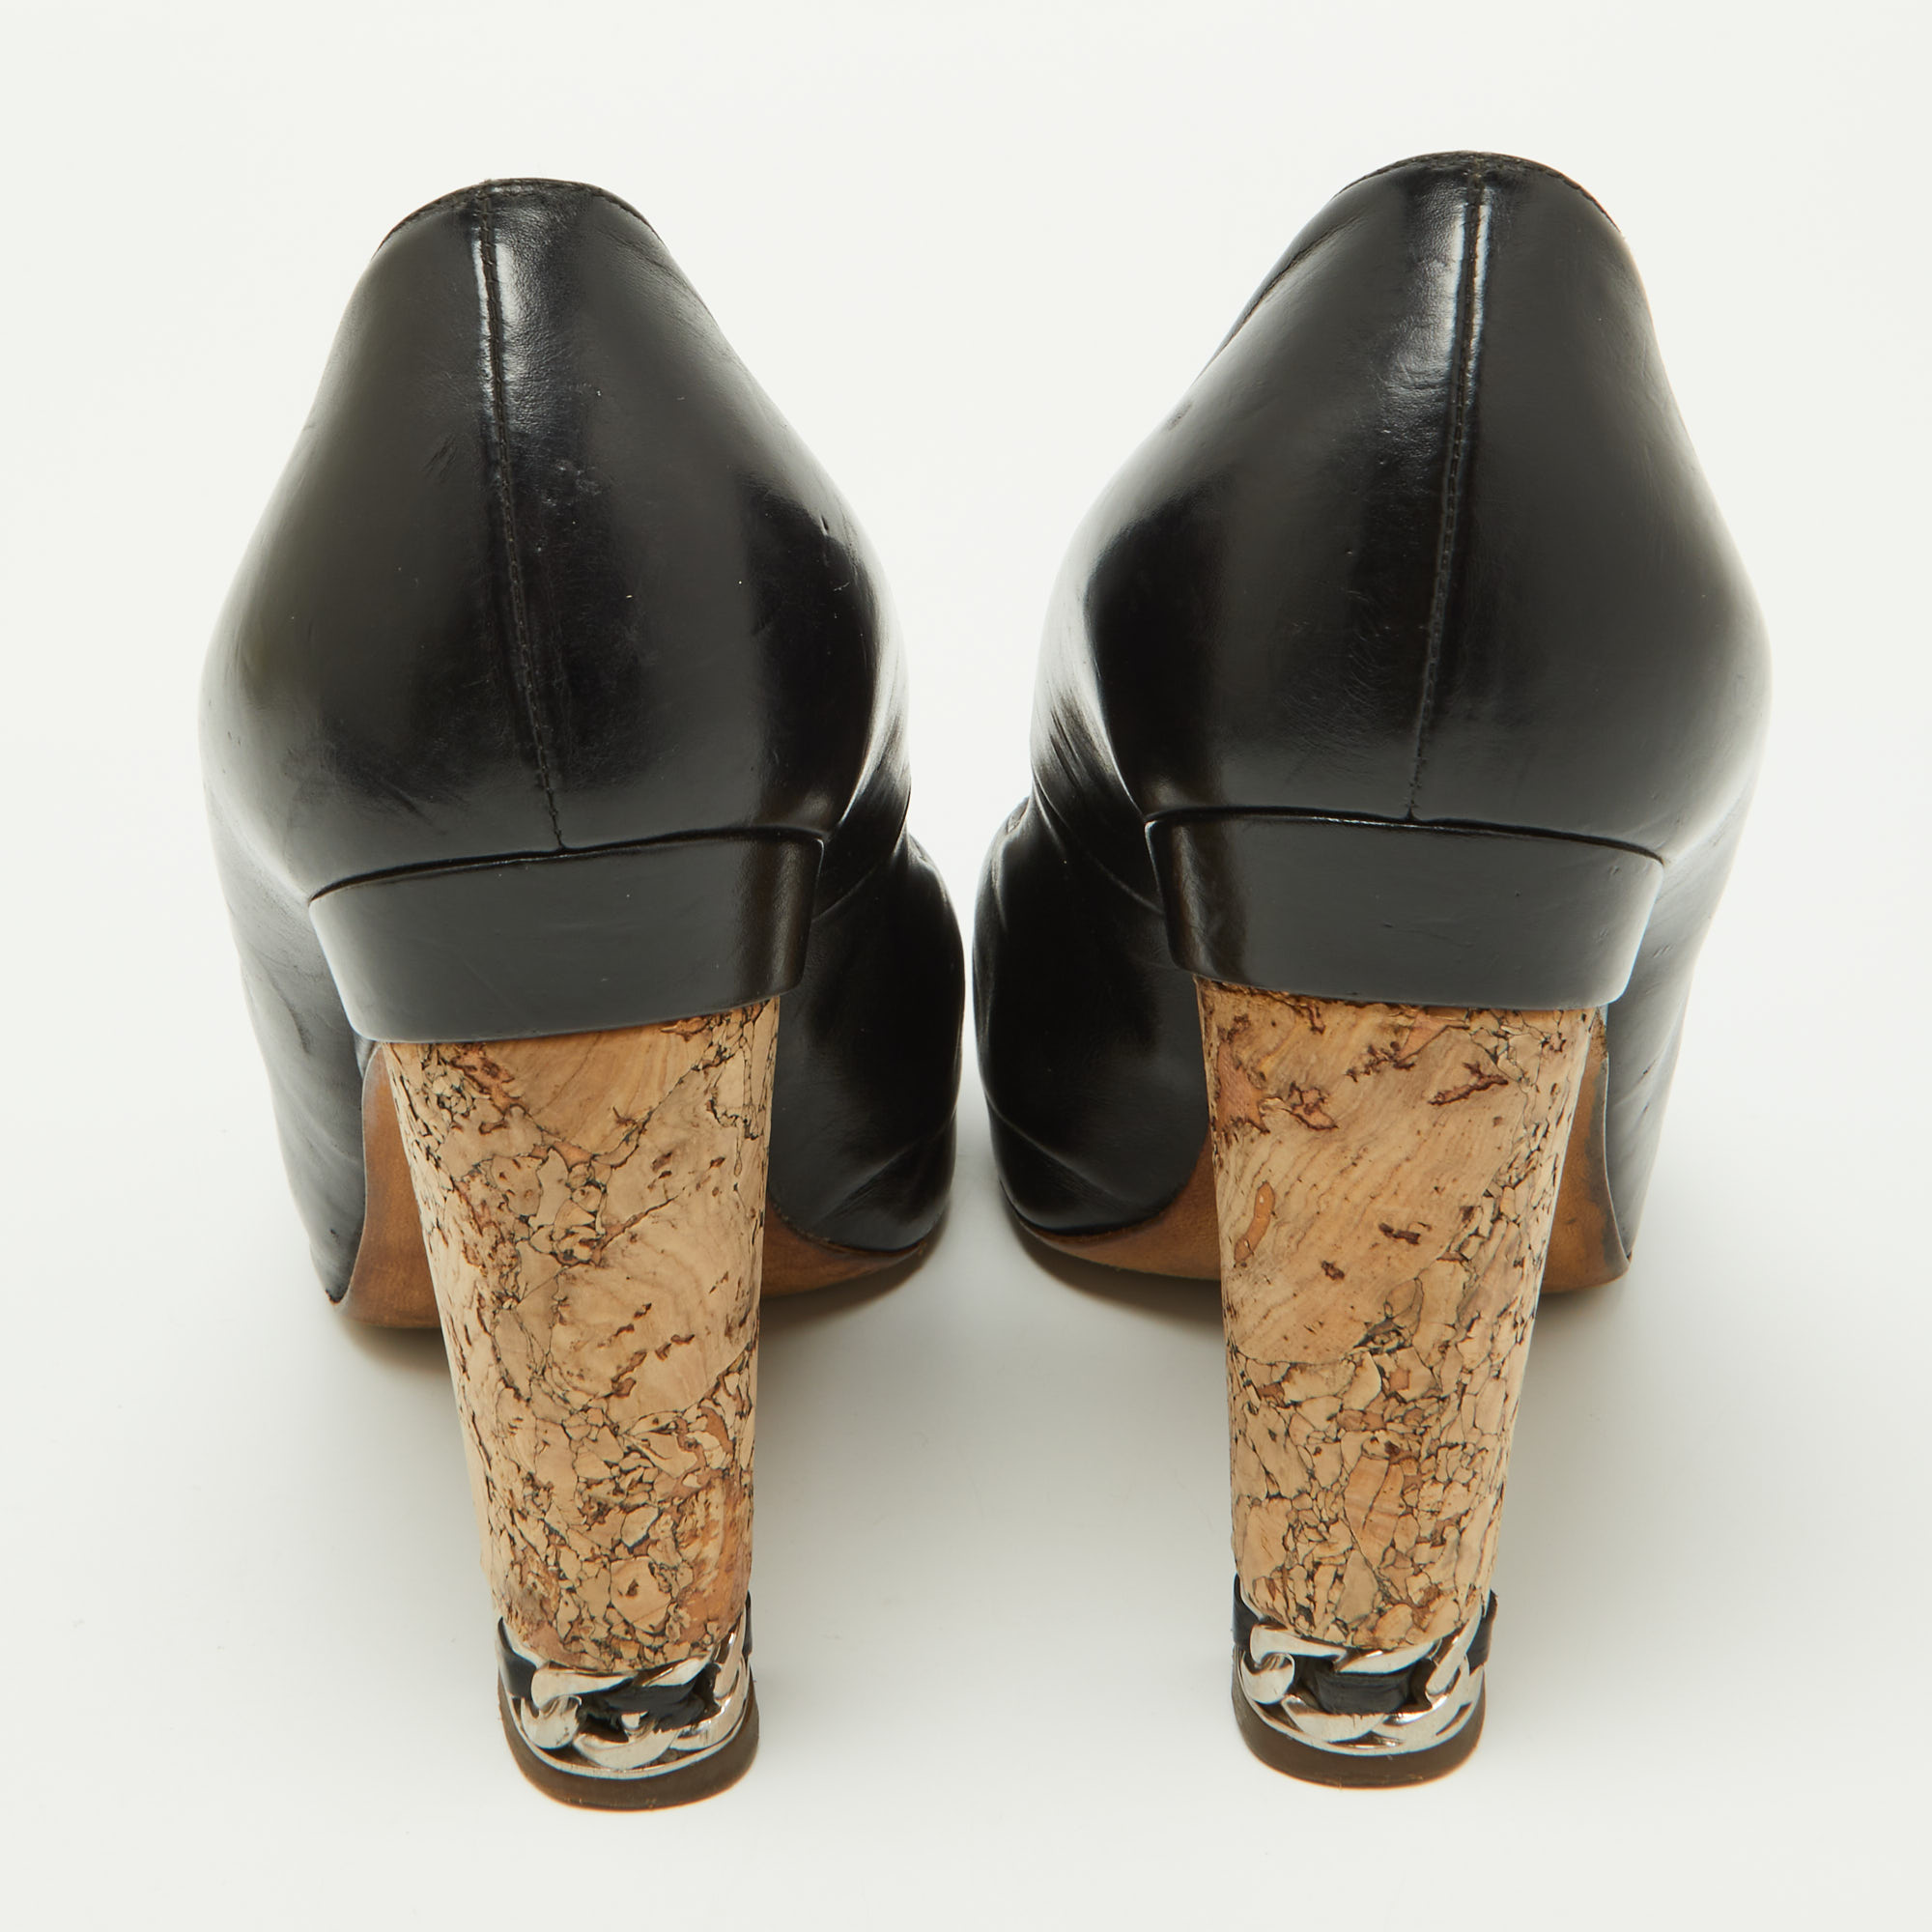 Chanel Black Leather Chain Link Cork Heel Open Toe Pumps Size 38.5